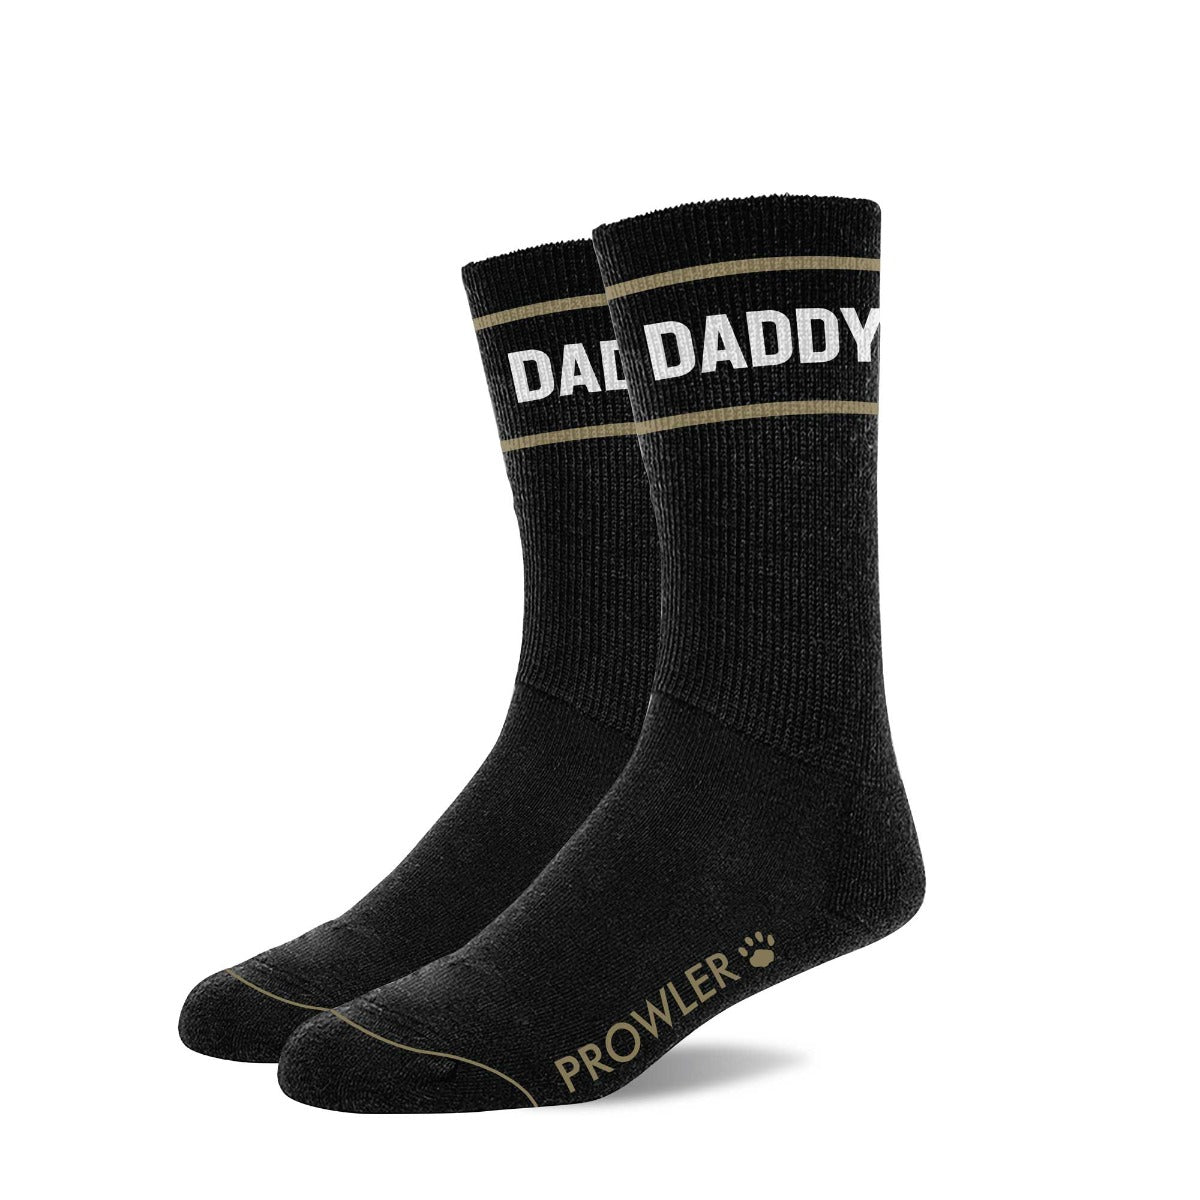 Prowler RED Daddy Socks (7960068456687)